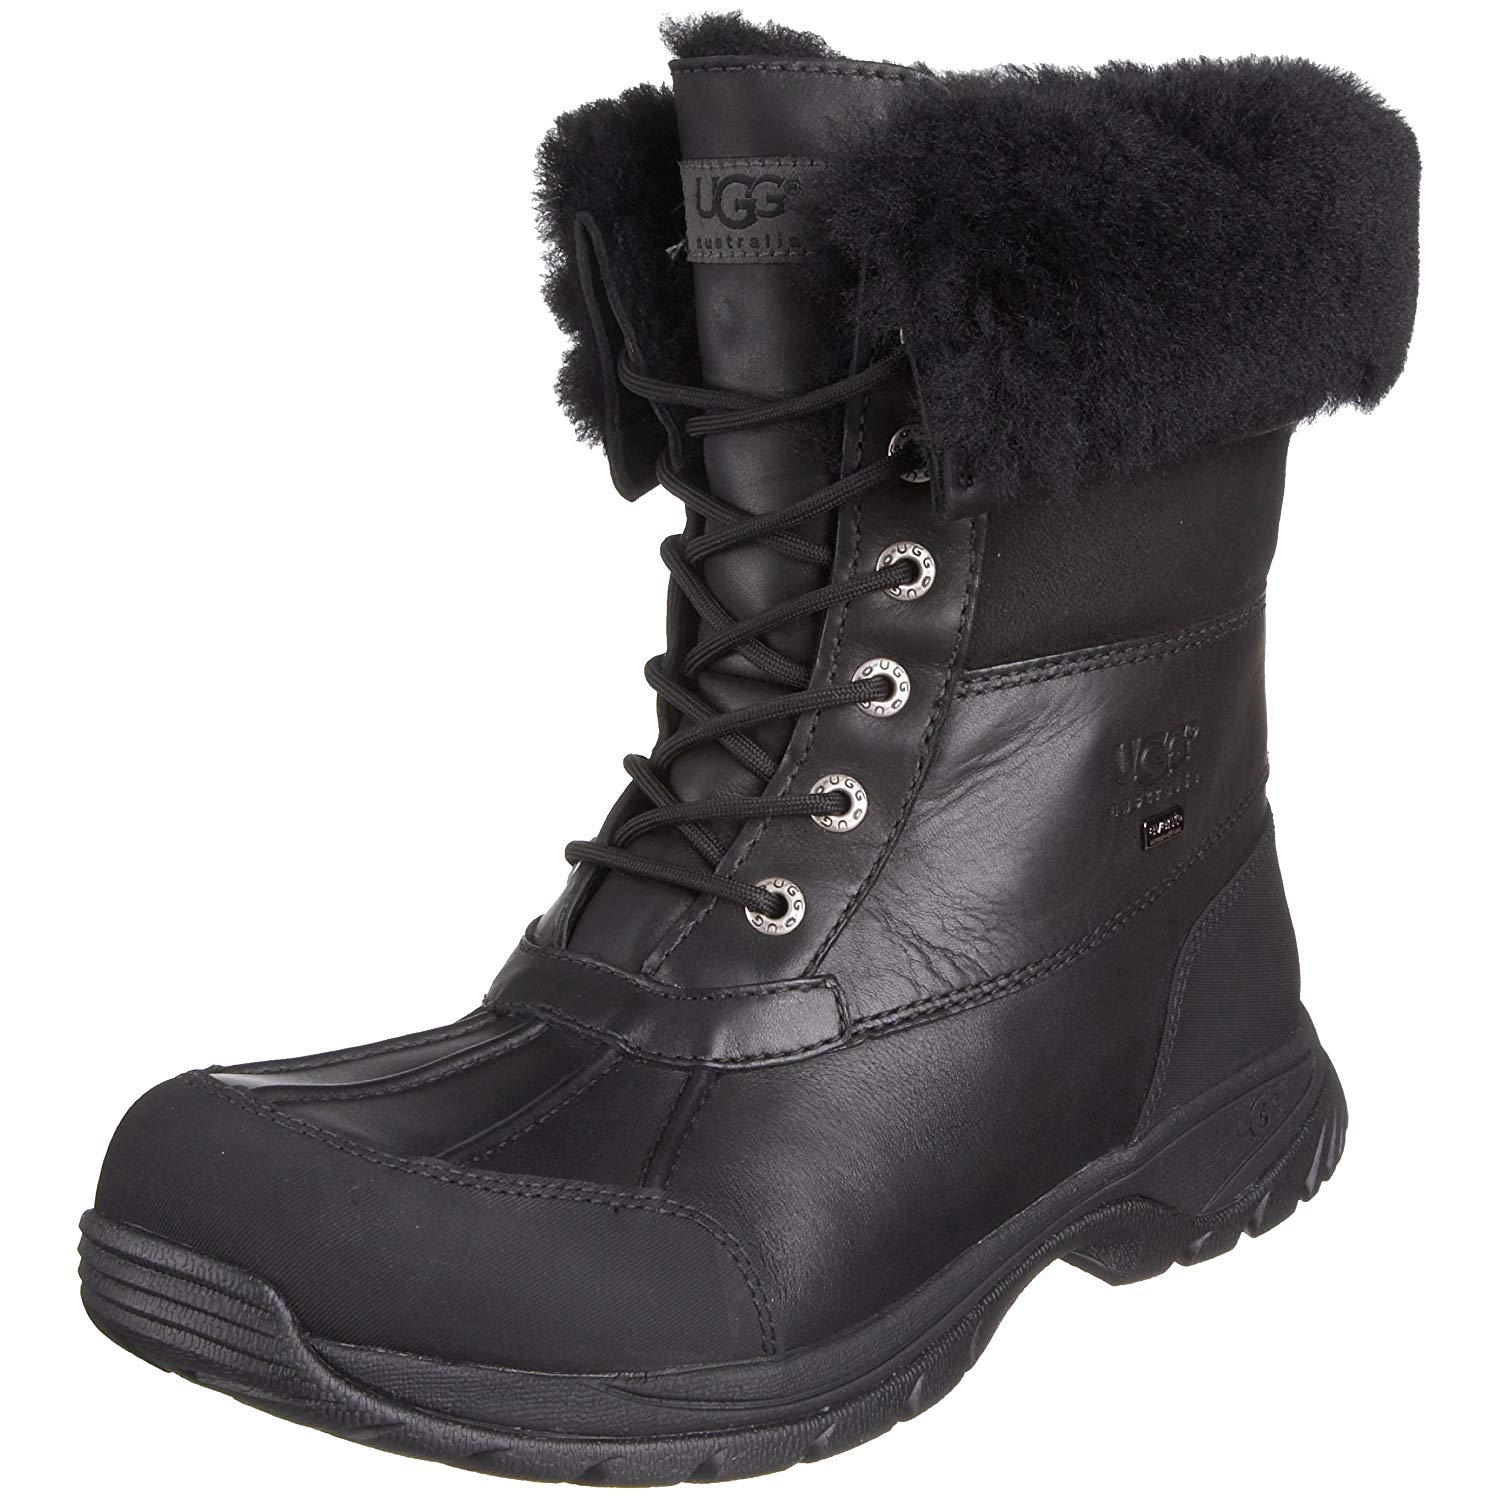 UGG Men's Butte Snow Boot, Black, Size 10.0 pVYv | eBay